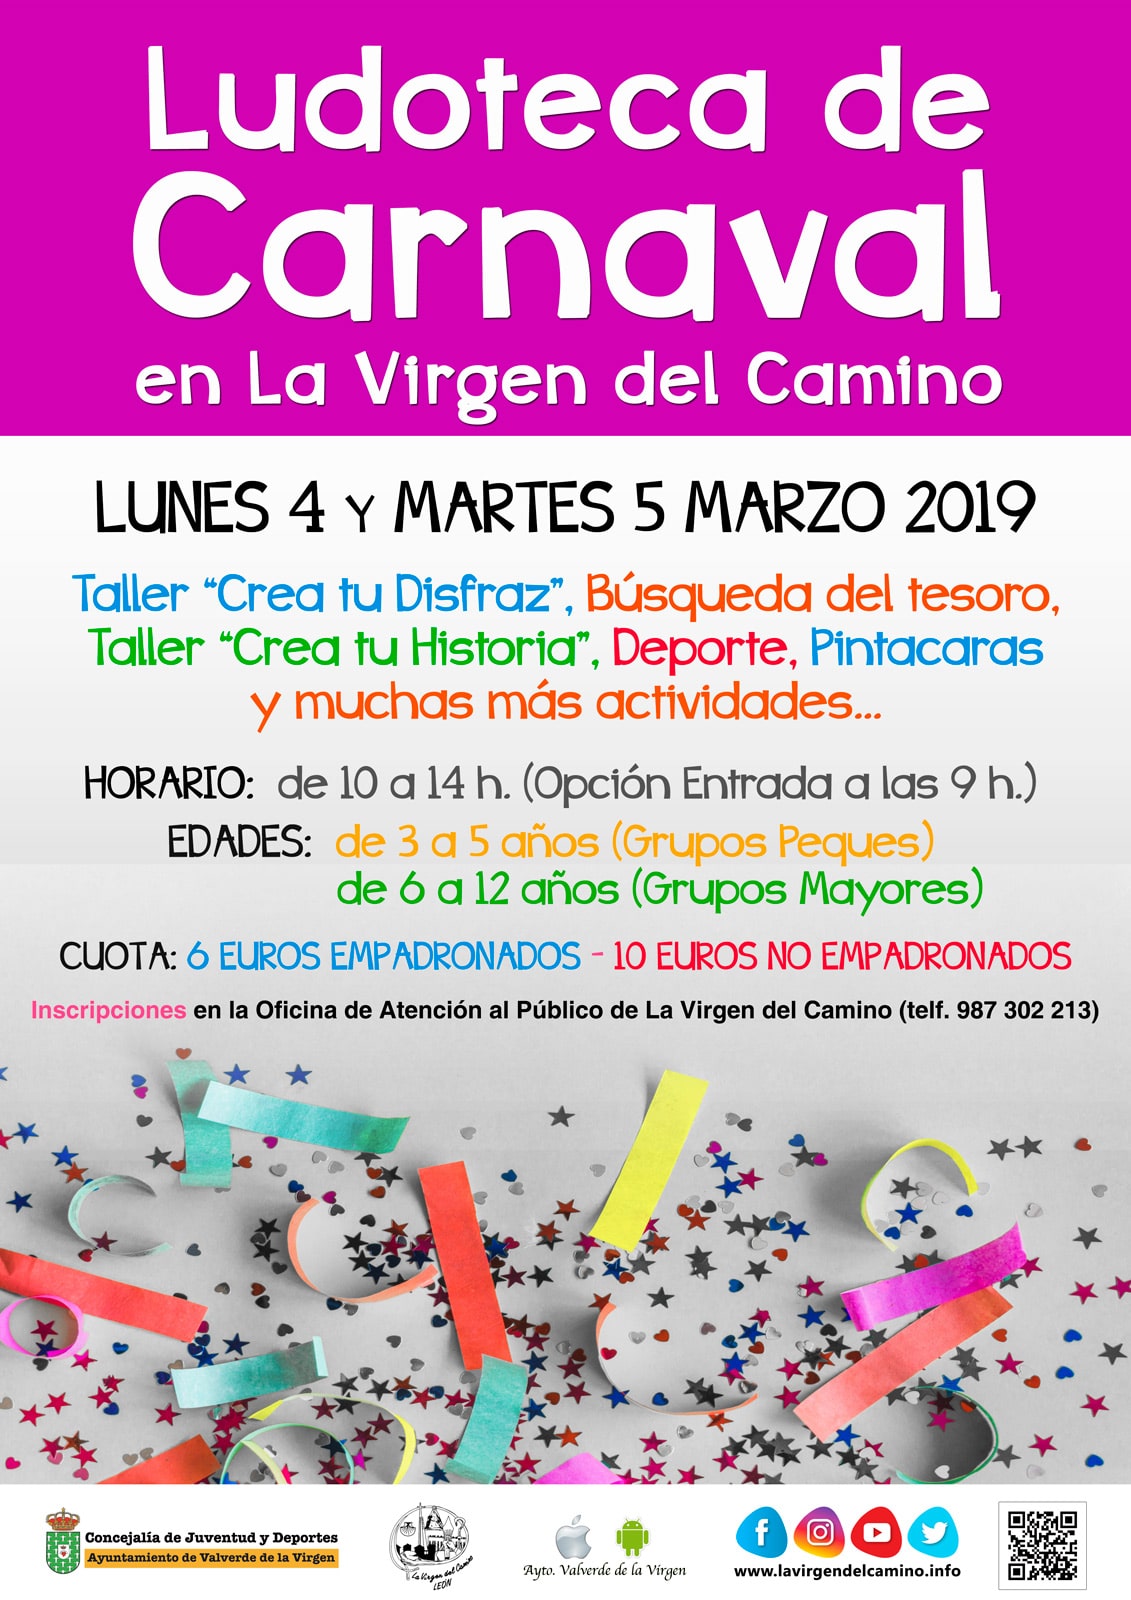 Ludoteca Carnaval 2019